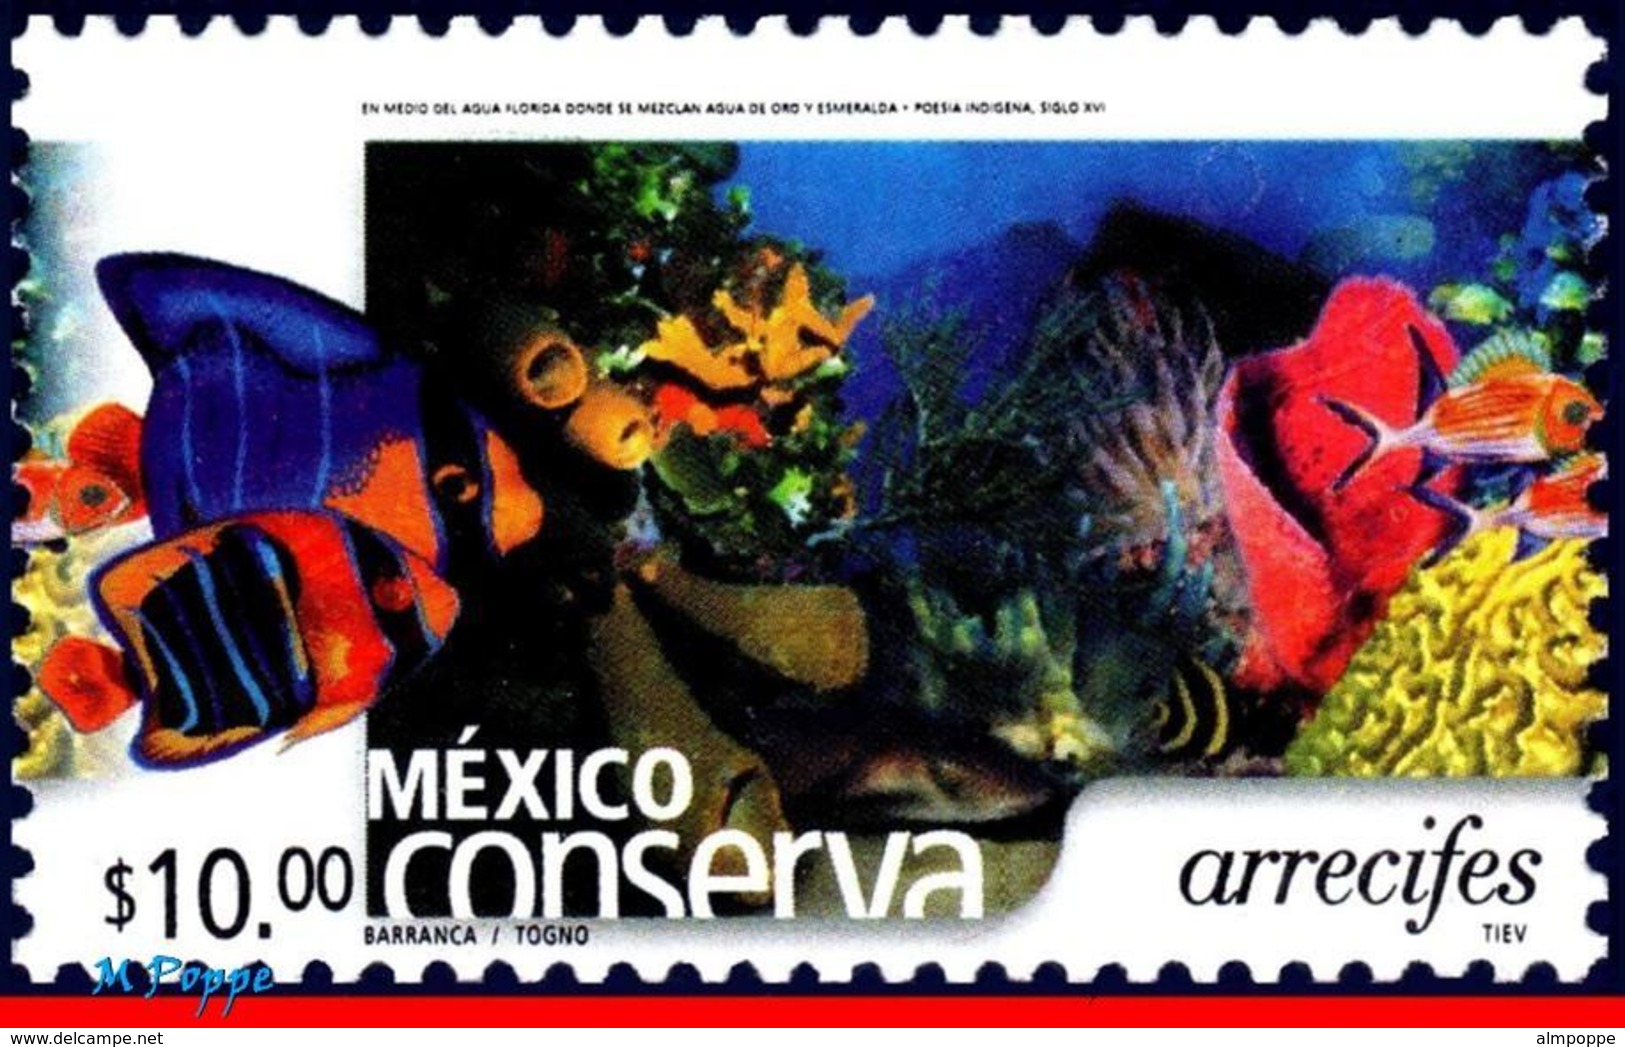 Ref. MX-2374 MEXICO 2004 NATURE, CONSERVATION - REEFS,, FISH, (10.00P), MNH 1V Sc# 2374 - Mexique